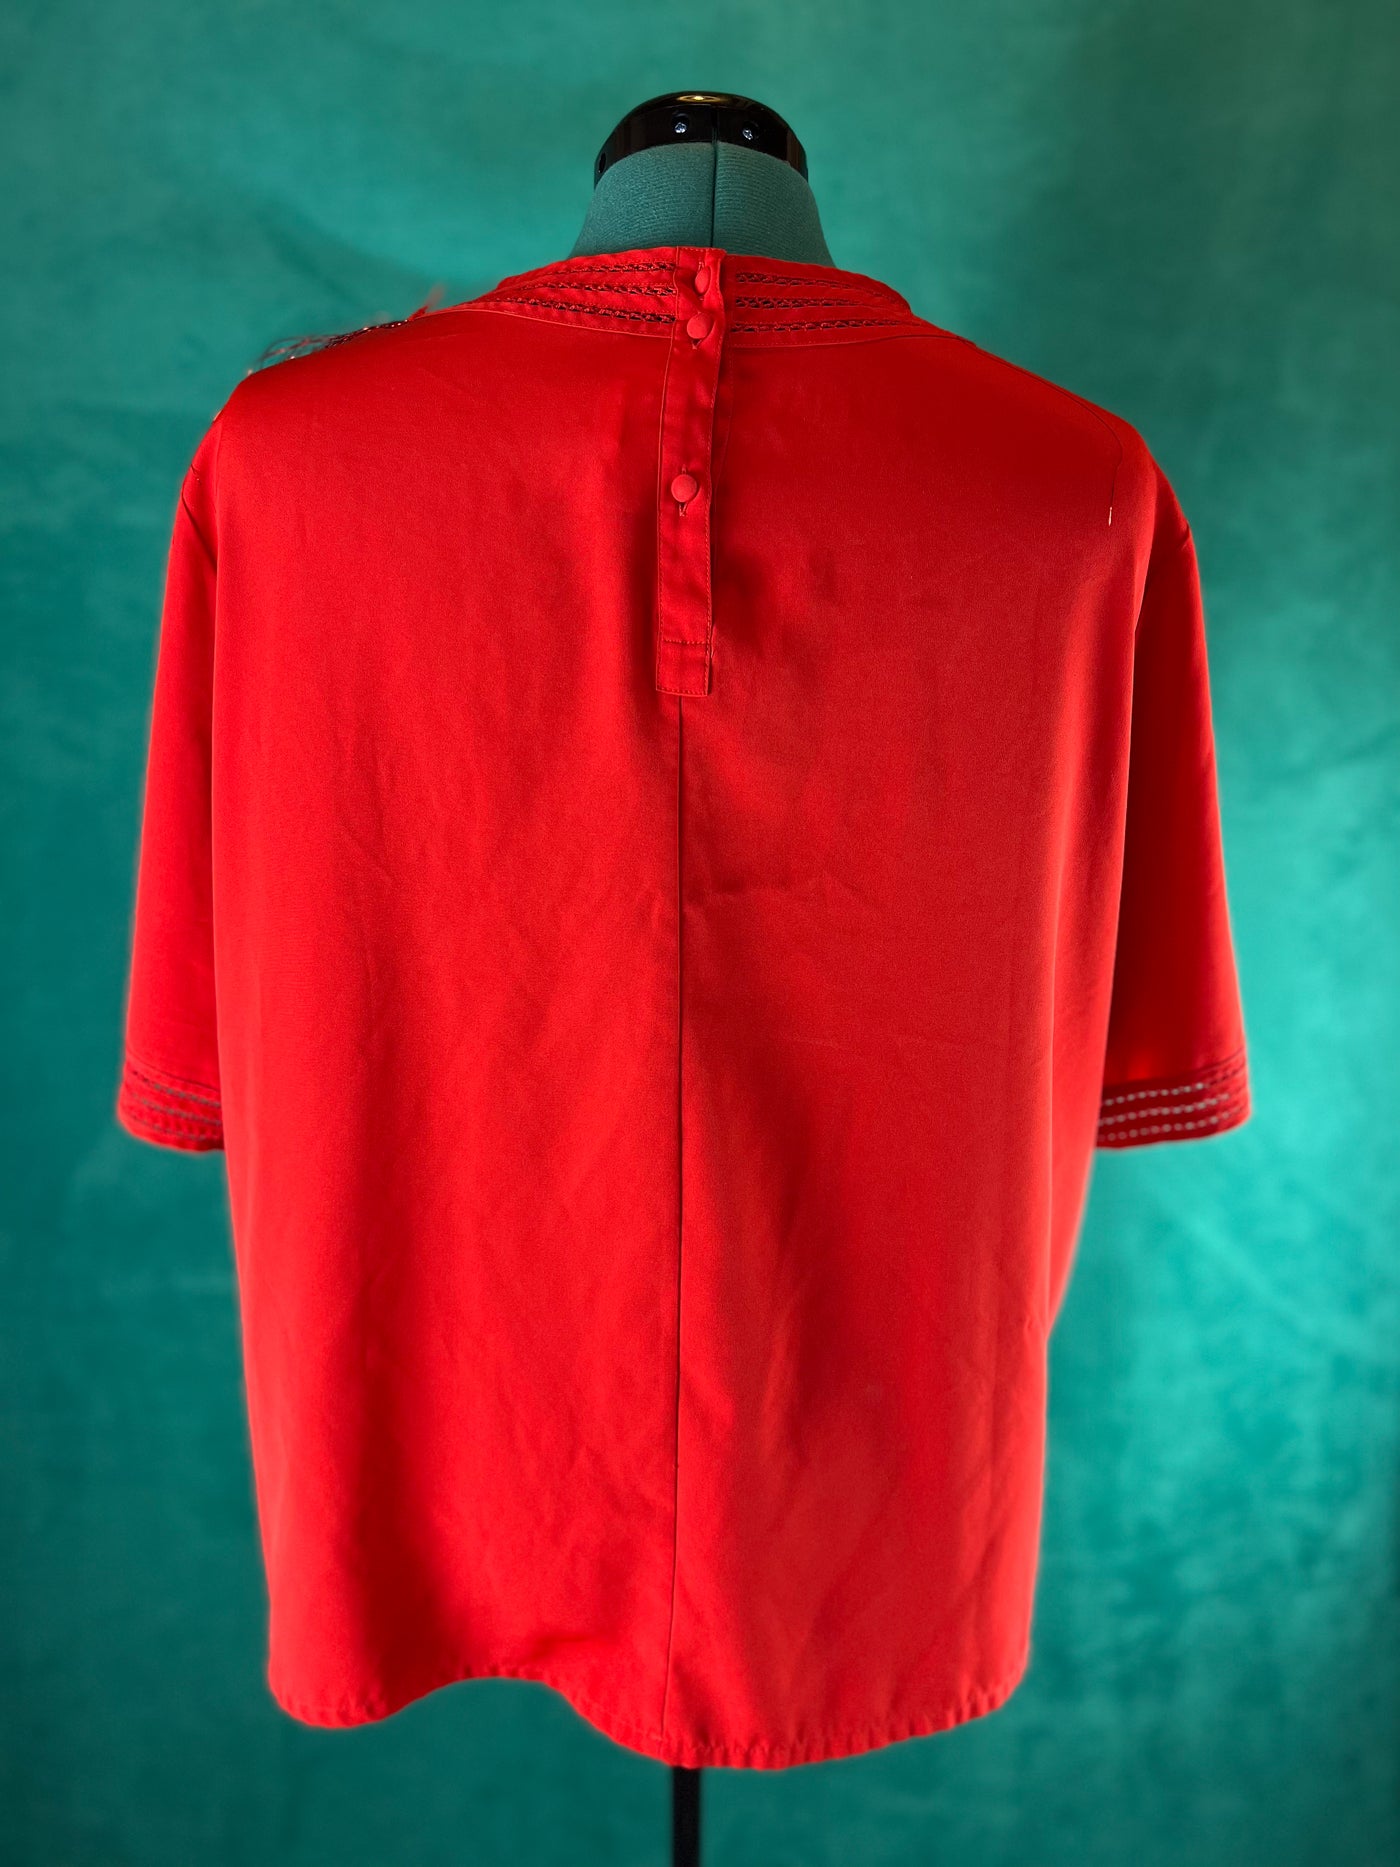 Red Short Sleeve Shirt with Fringe - Size 20W/1X